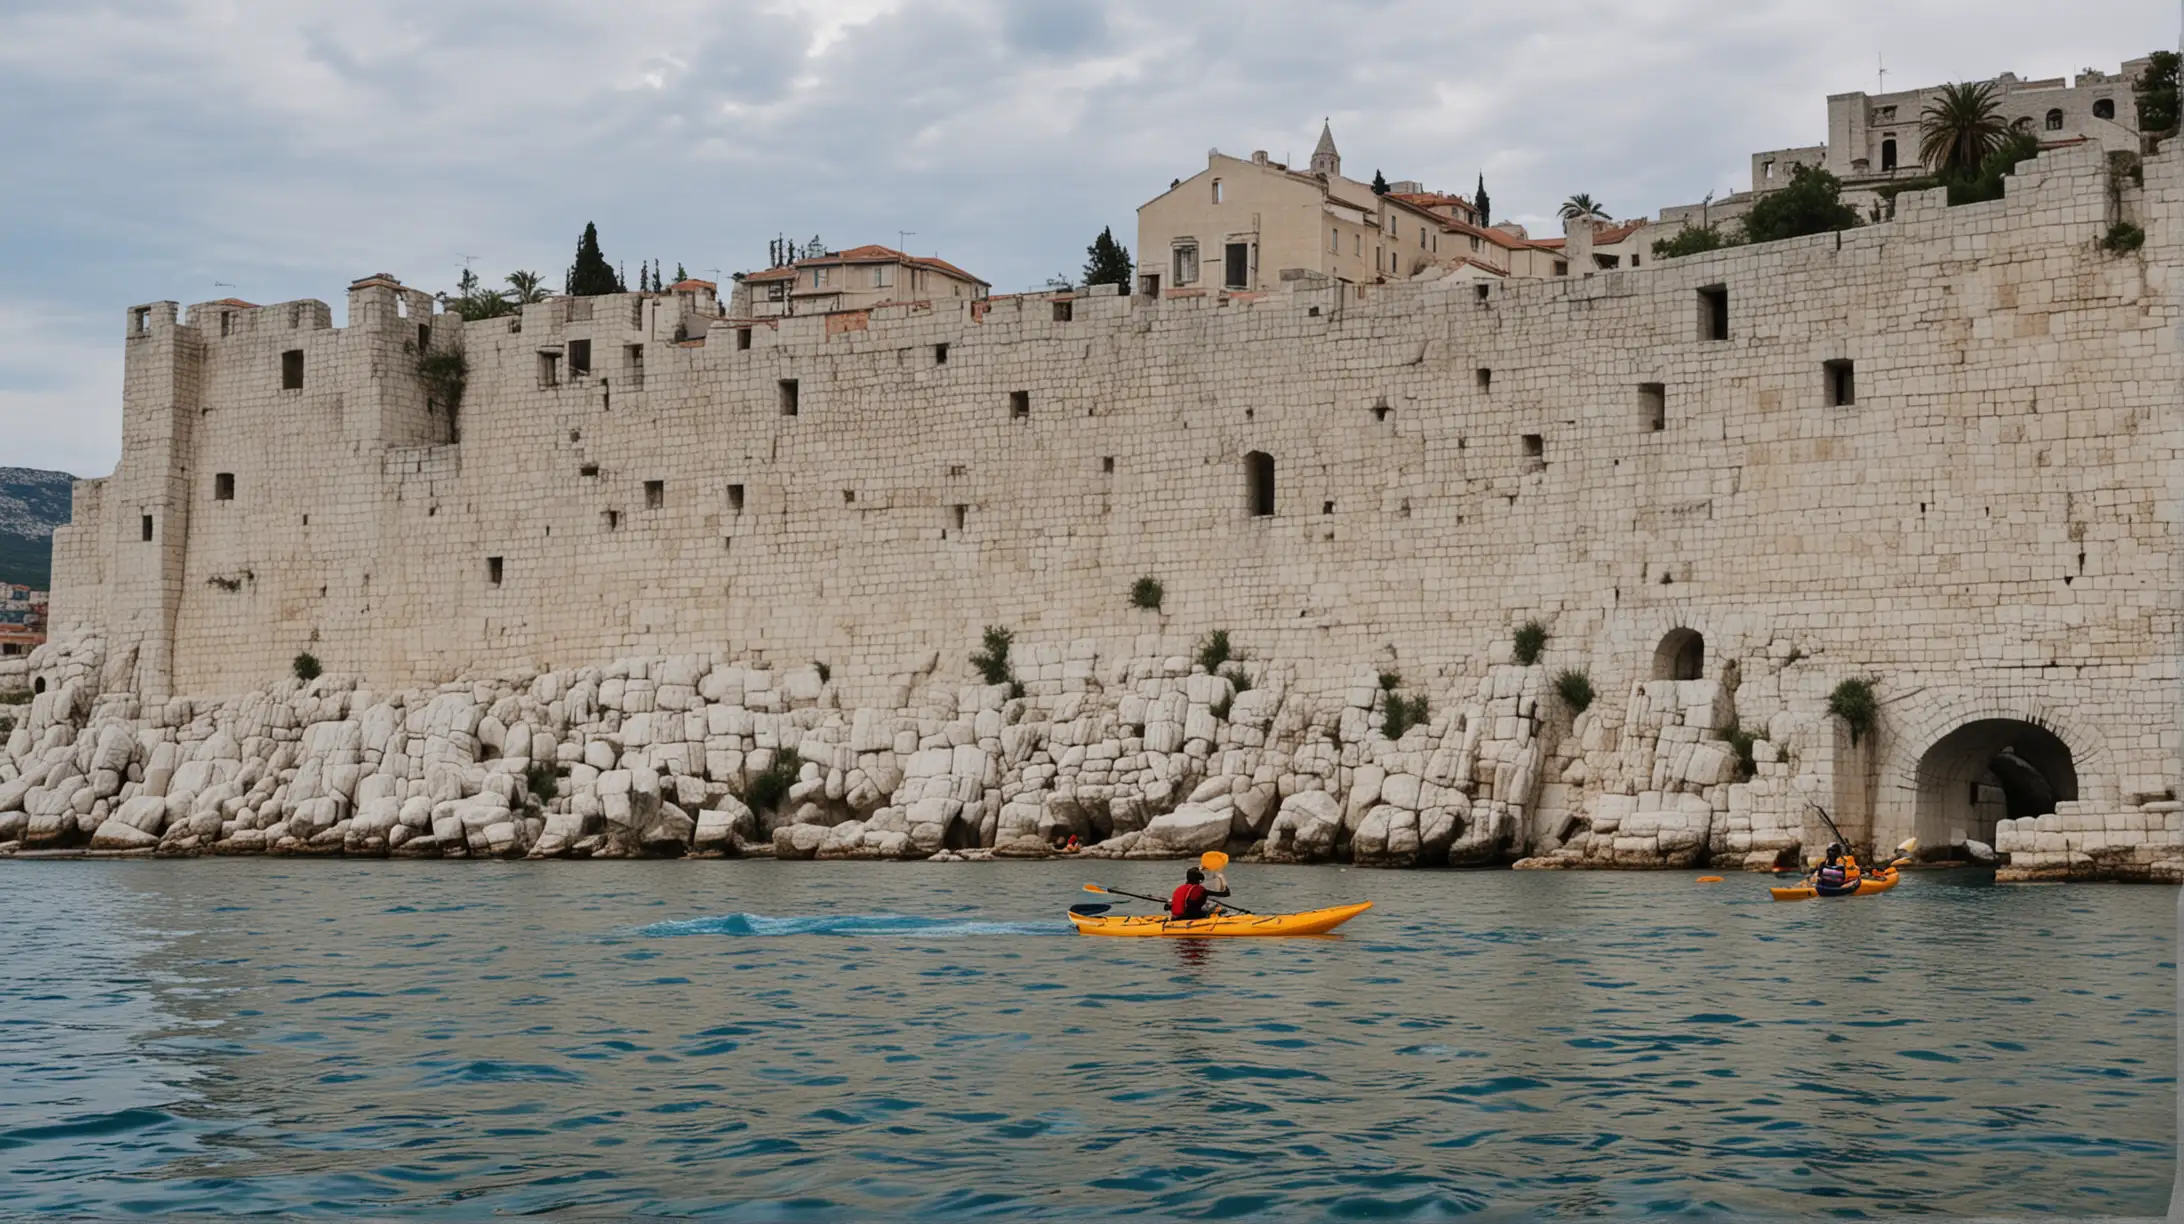 scene, kayaking around ancient city walls in split Croatia
